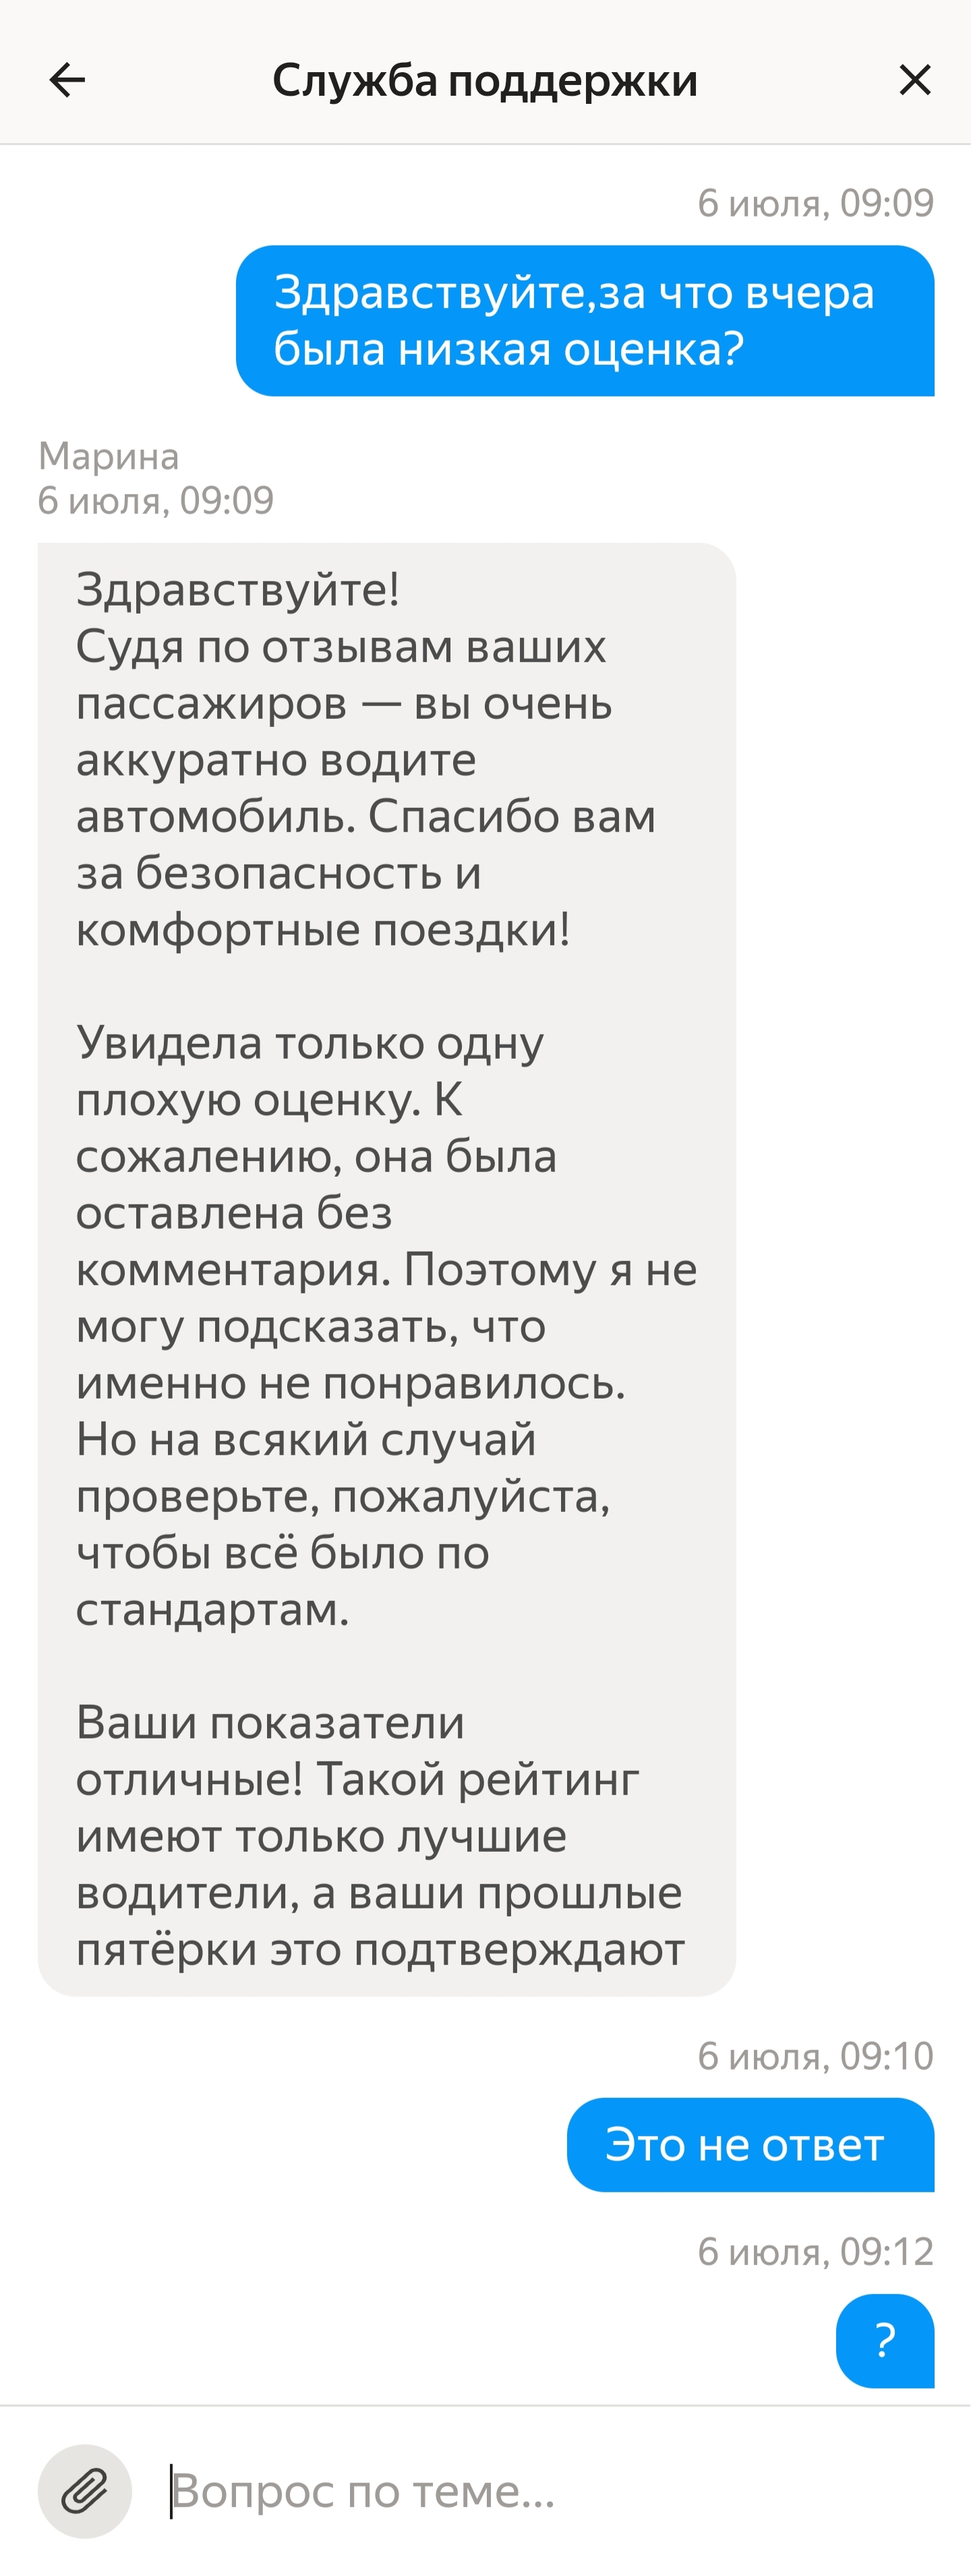 Yandex as always... - My, Yandex Taxi, Yandex pro, Longpost, A complaint